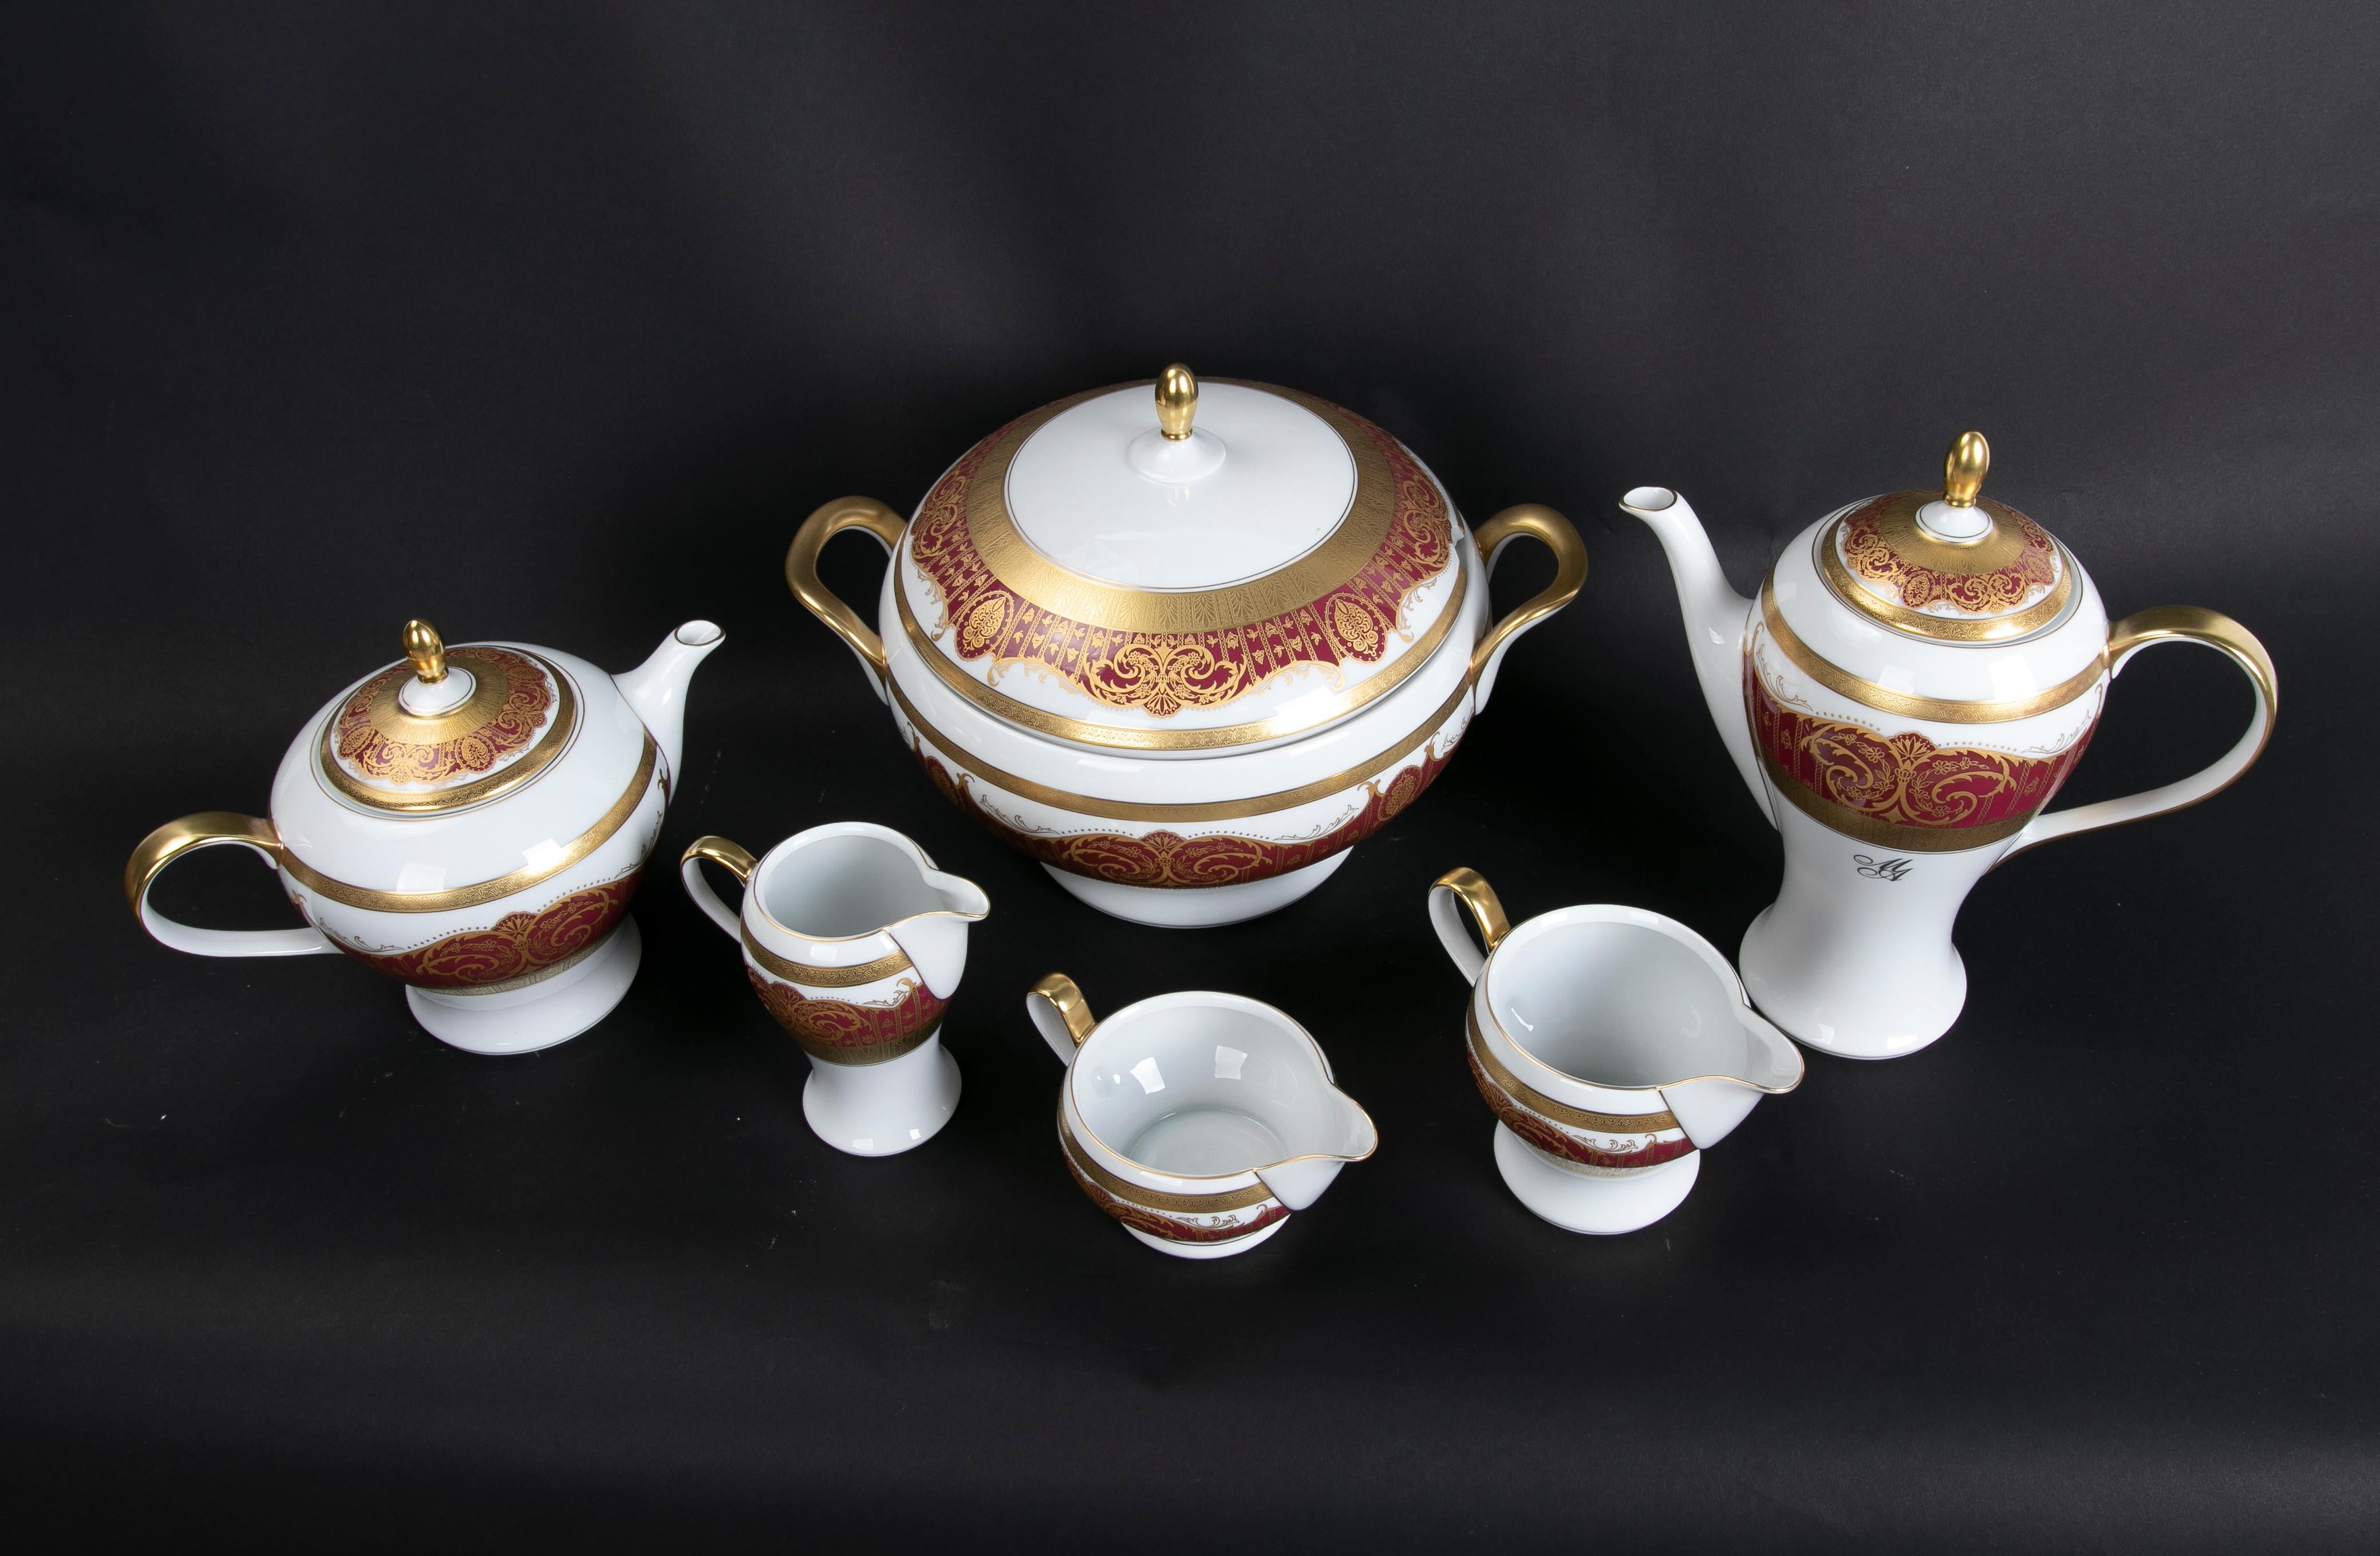 1970s Karlovarsky porcelain tableware from Czech Republic. It's Bohemian fine porcelain and it has inscriptions (